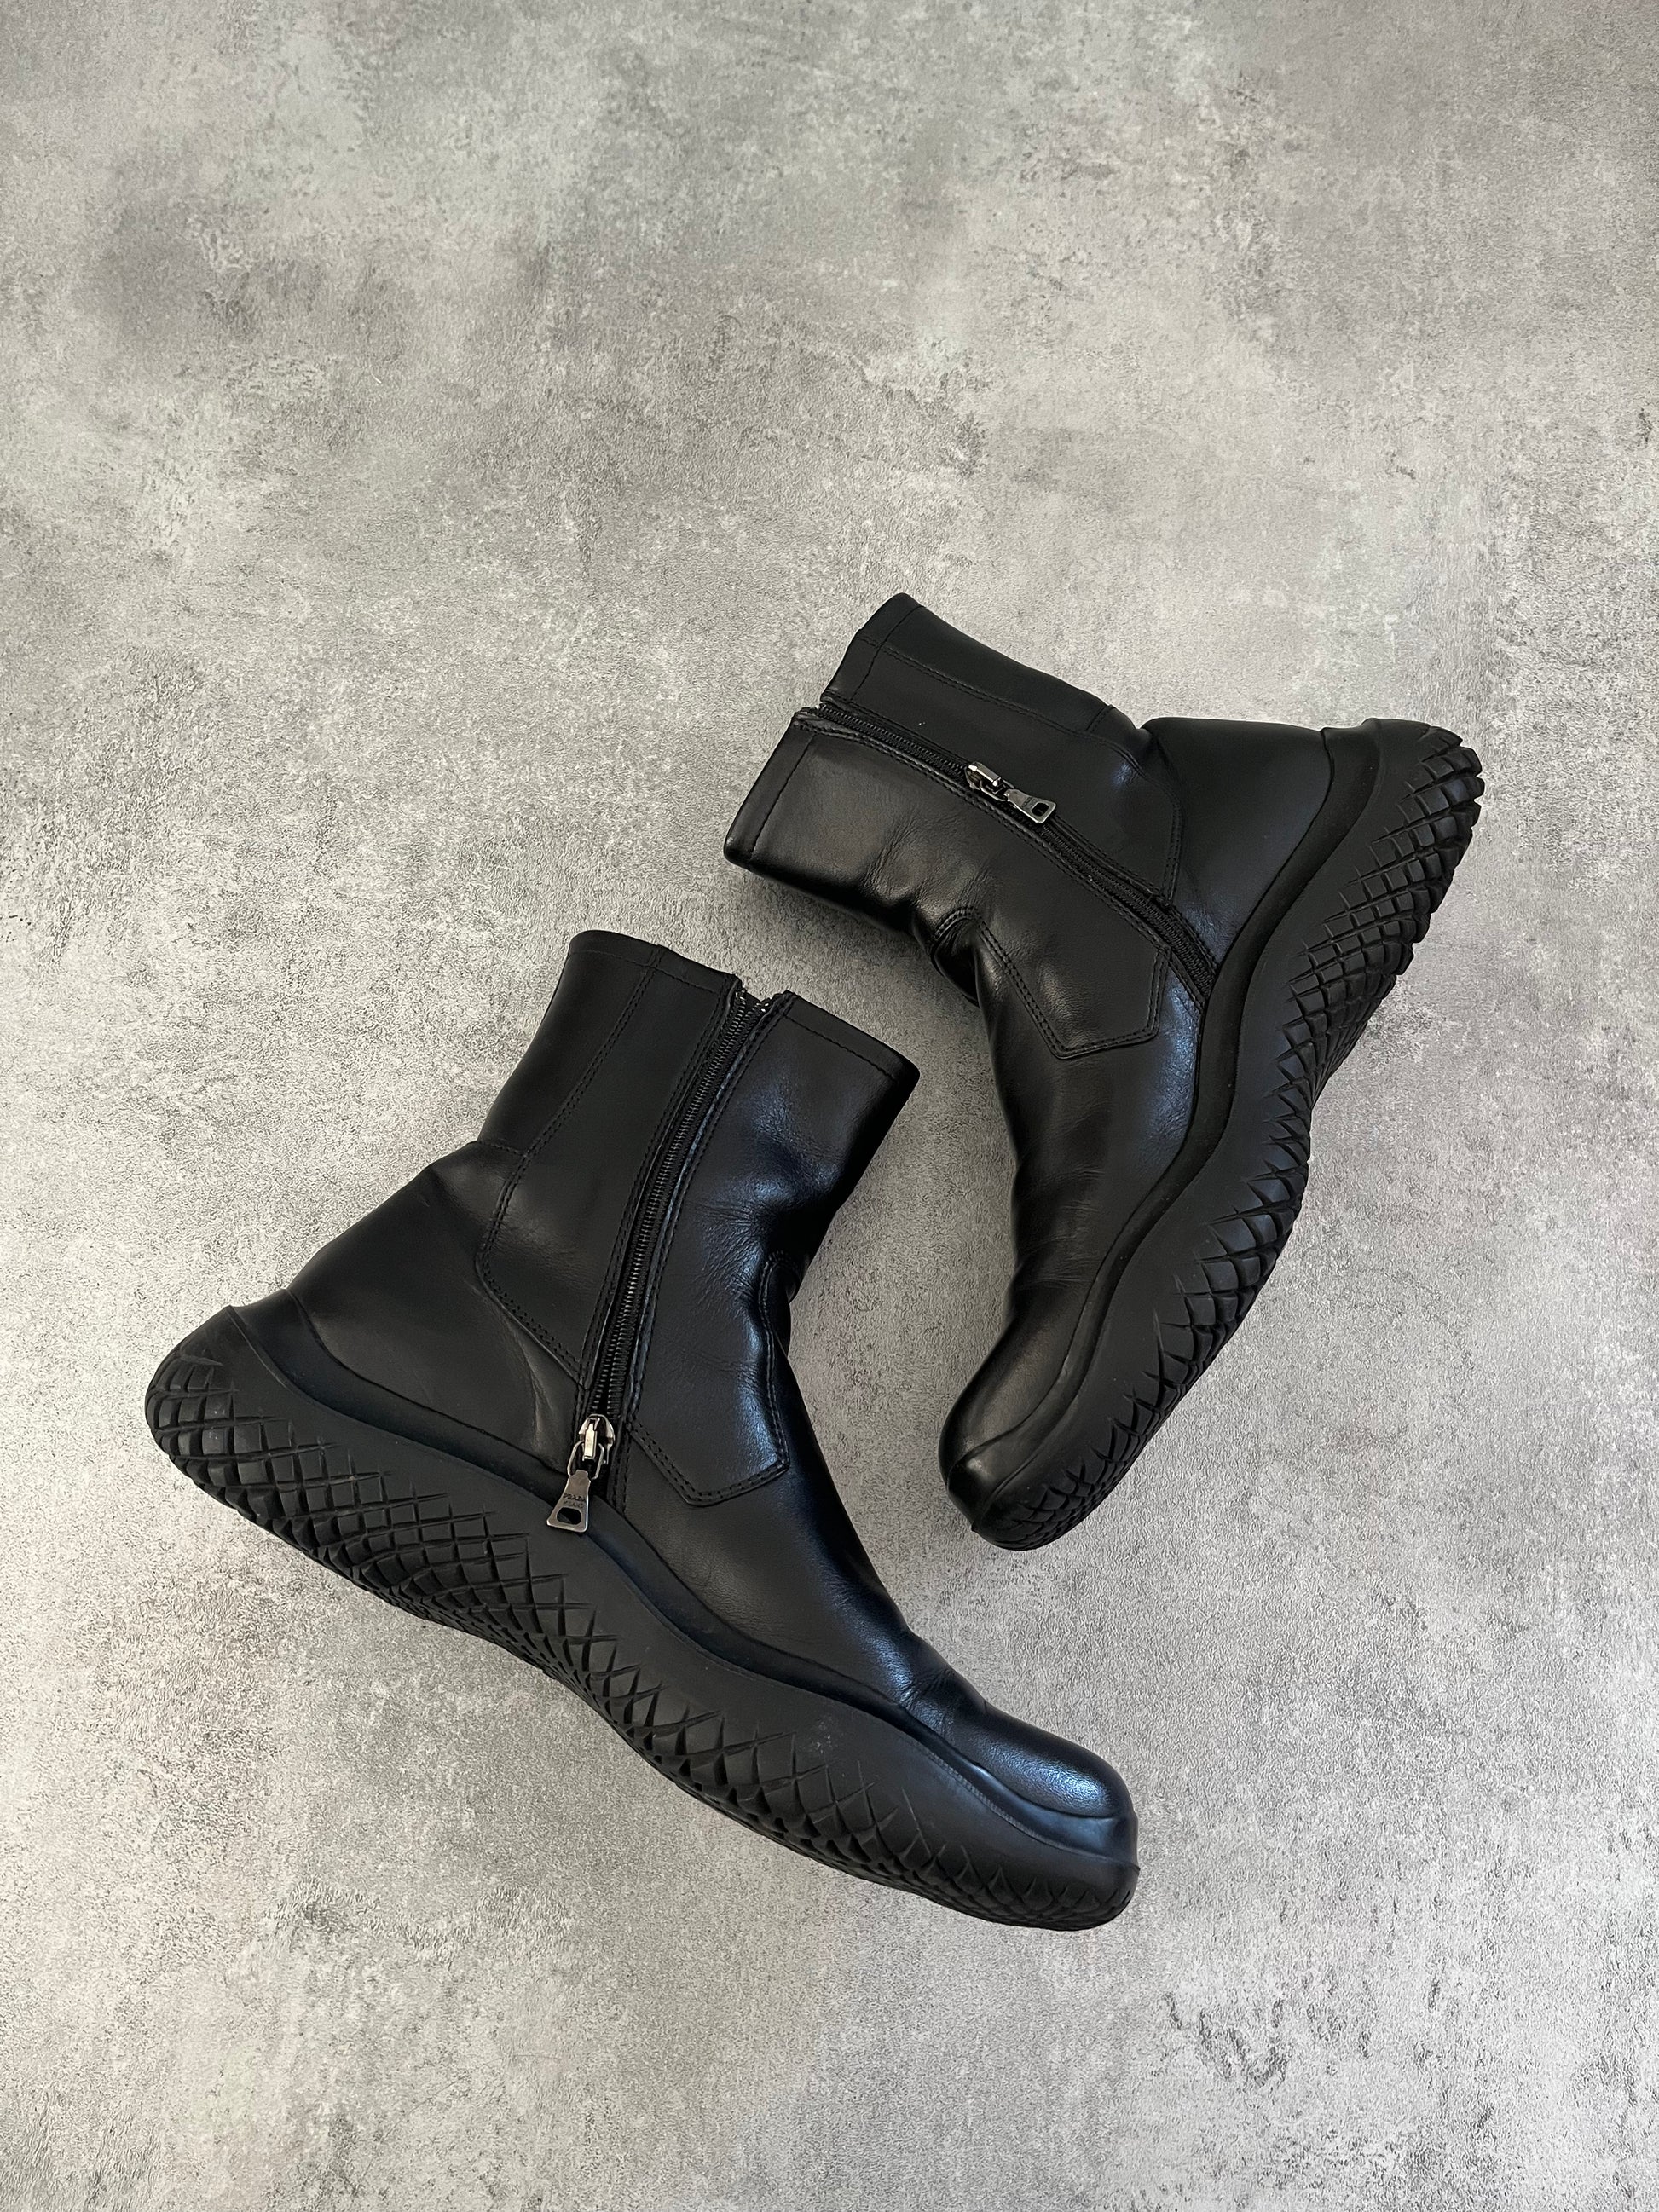 FW1999 Prada Ankle Vibram Leather Boots (40.5eu/us7.5) (40.5) - 4